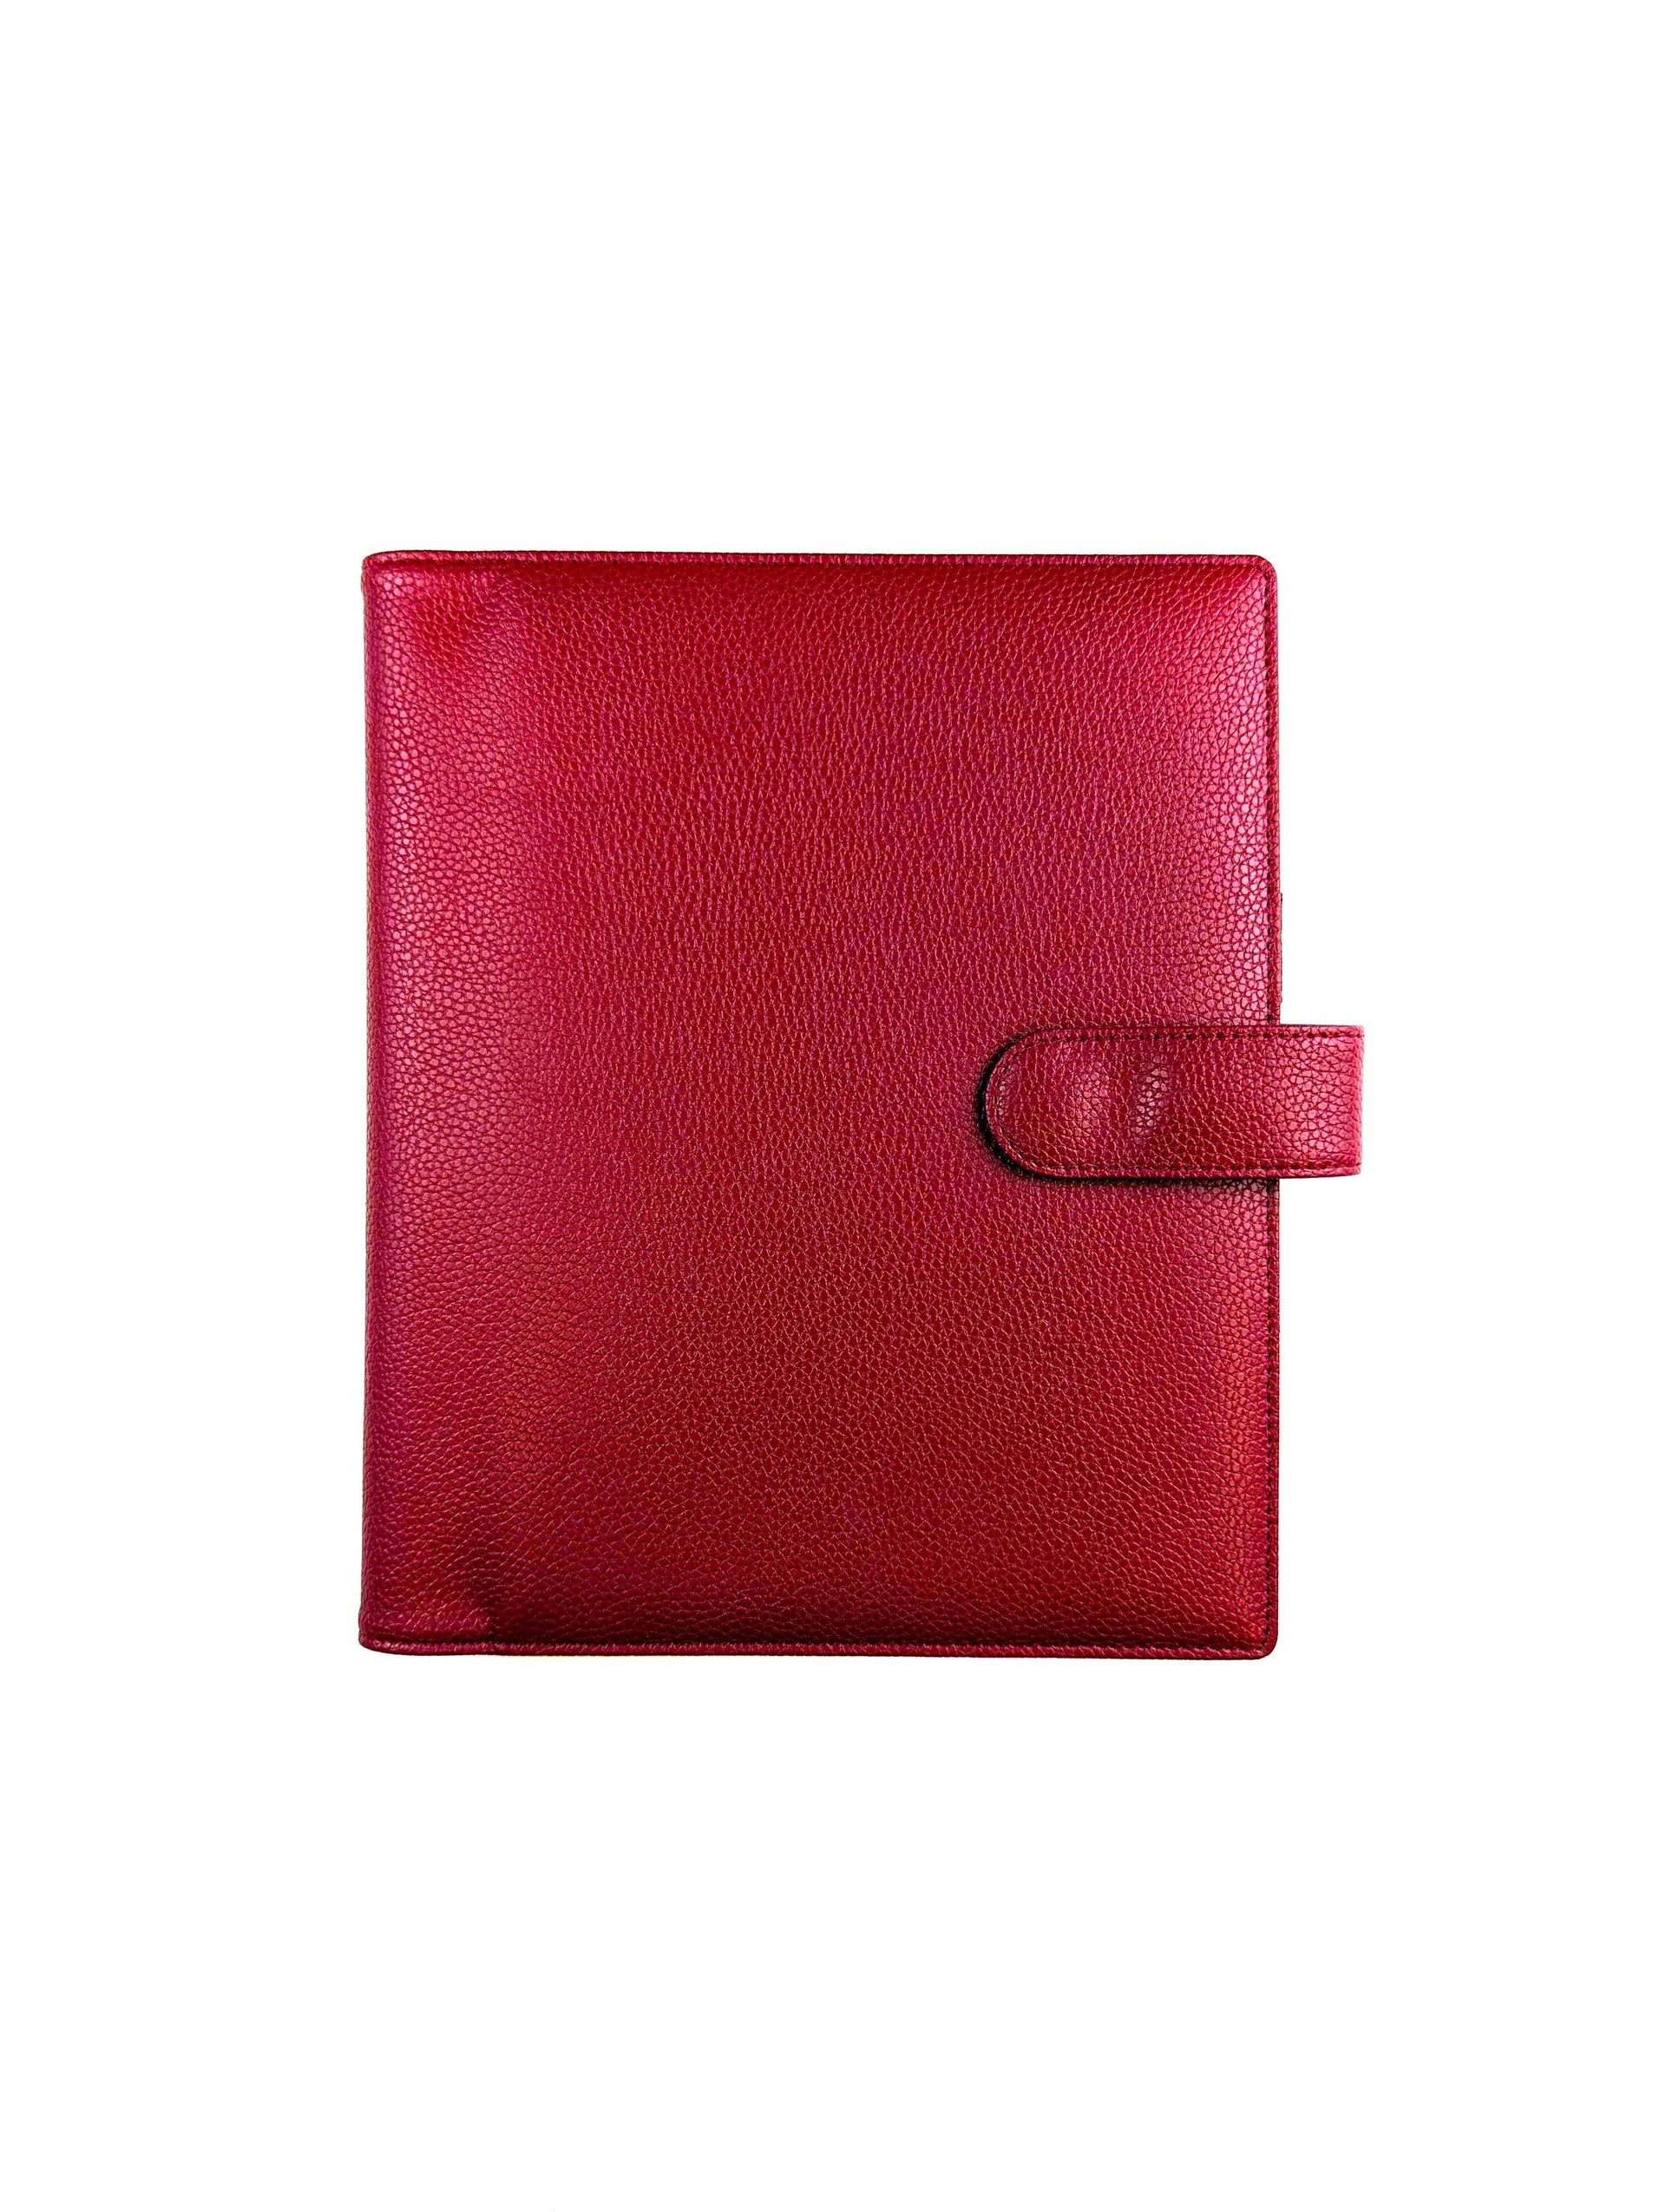 Discbound Planner Cover | Wine Red Vegan Leather | Wrap-around - Jane's Agenda®